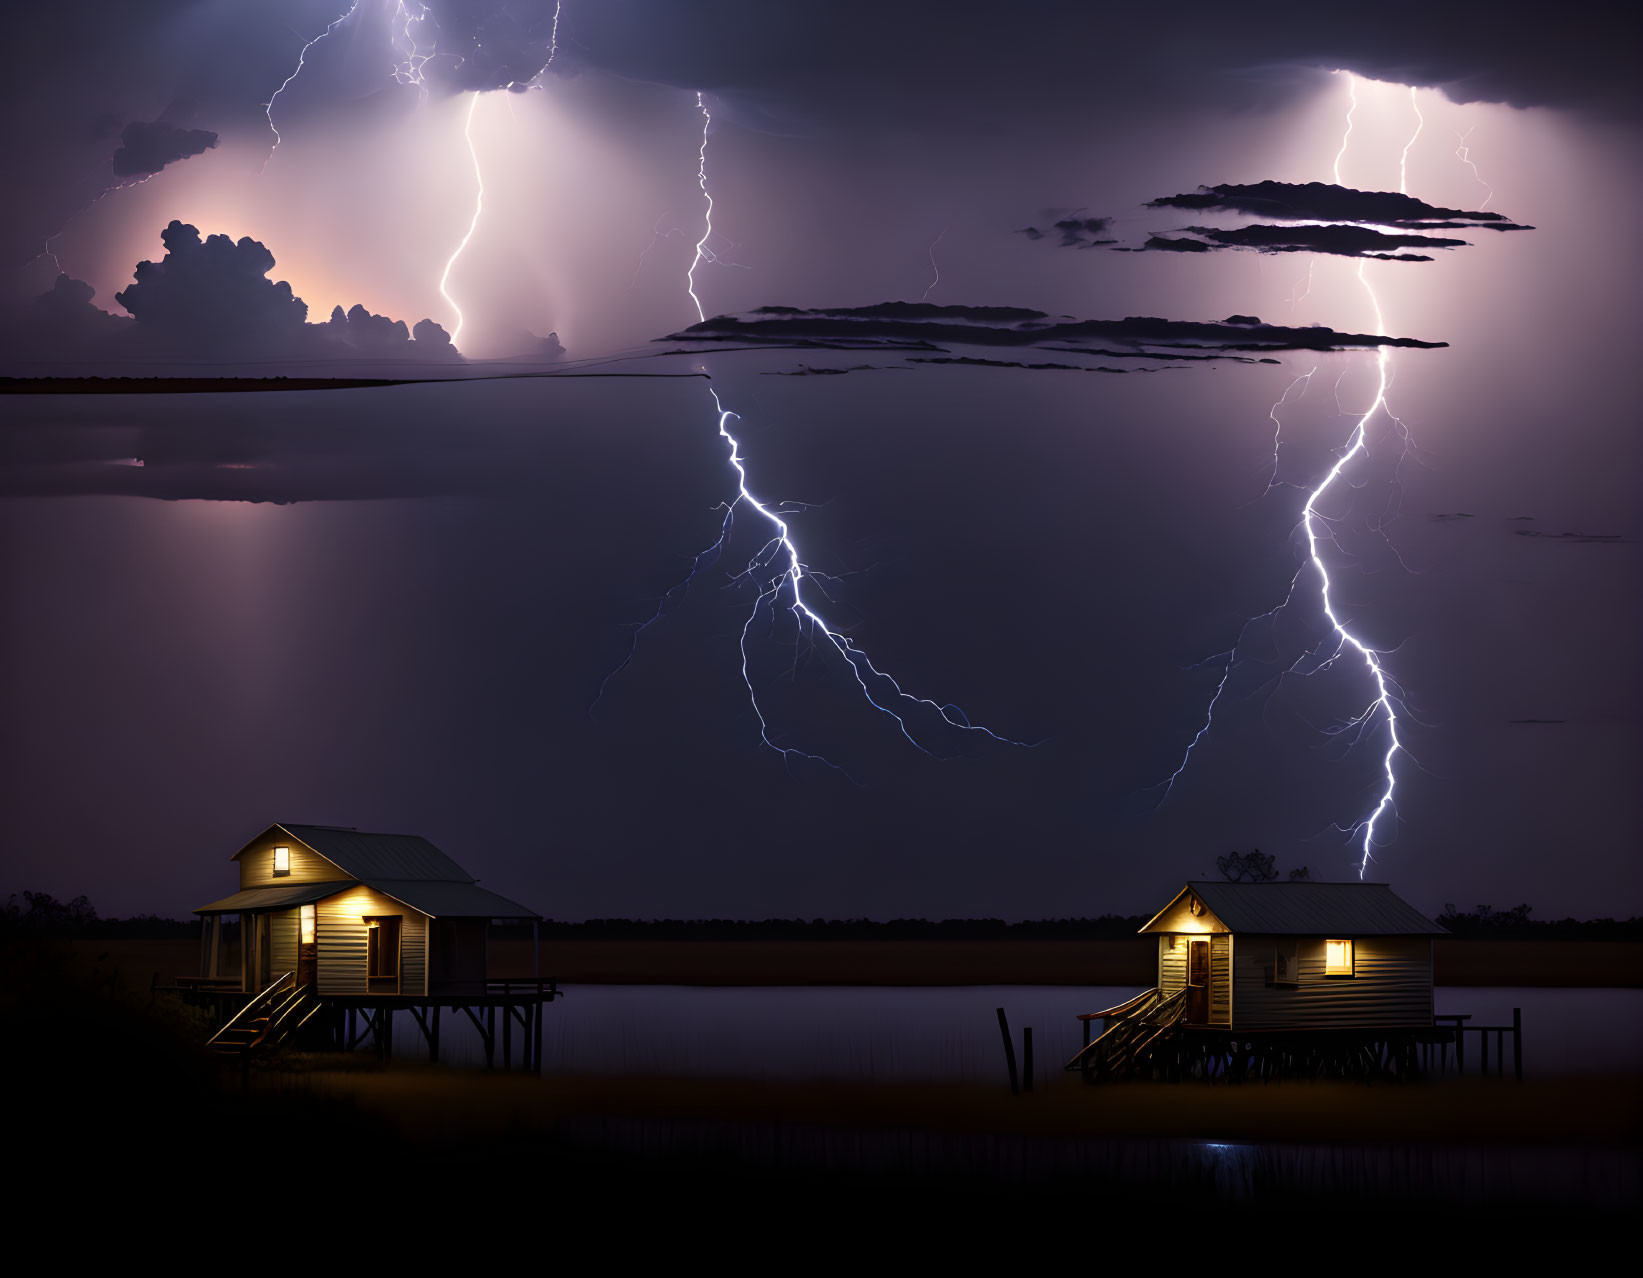 Dramatic night sky with lightning over illuminated stilt houses